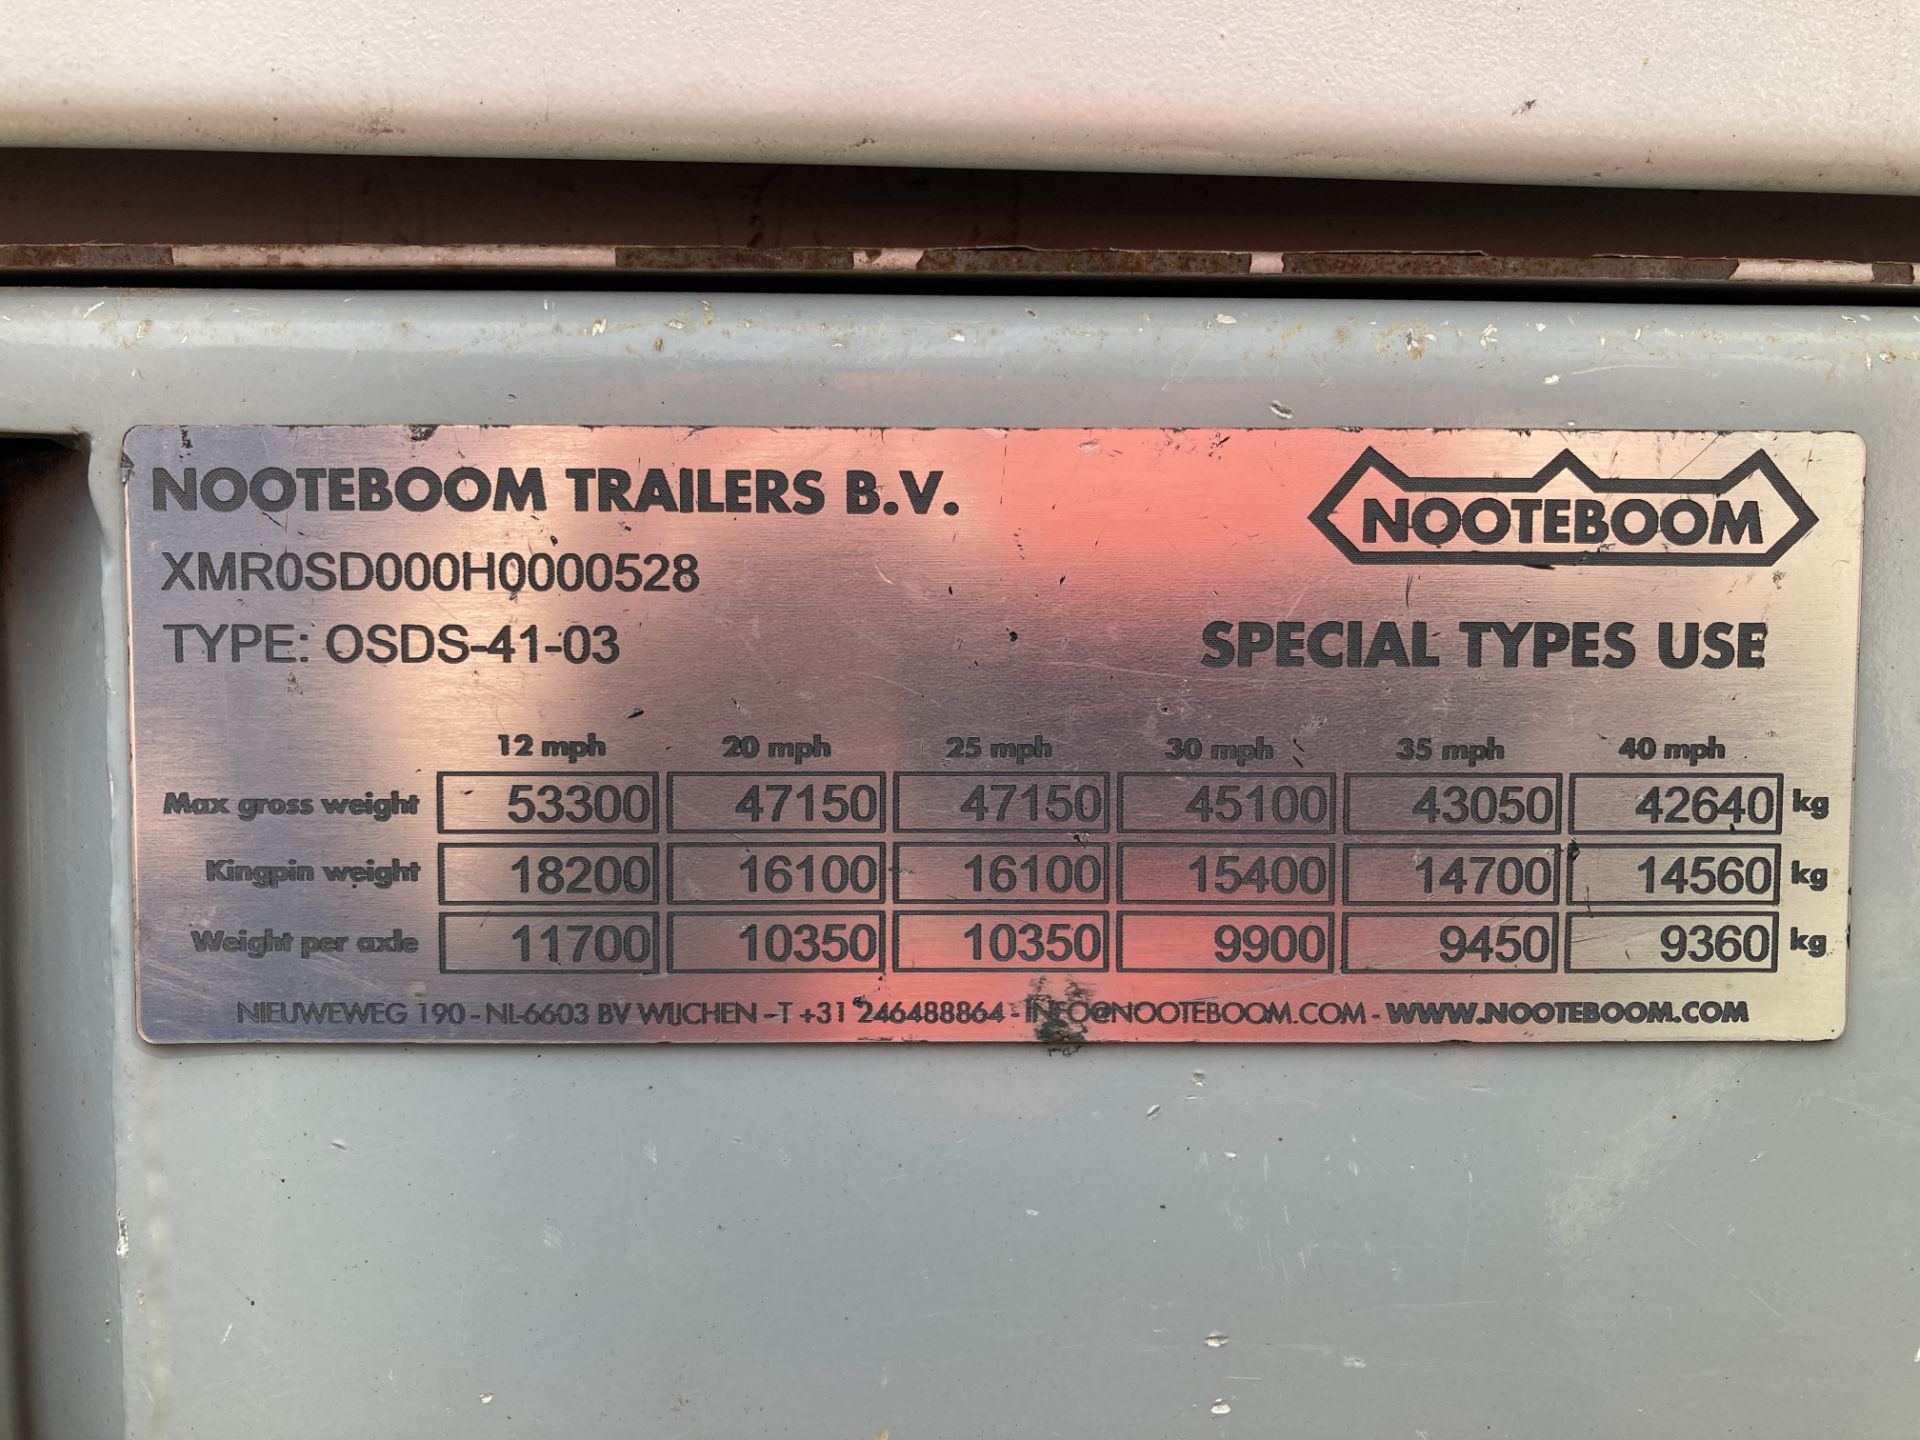 Nooteboom OSDS-41-03 tri axle step frame low loader trailer (2017) - Image 4 of 8